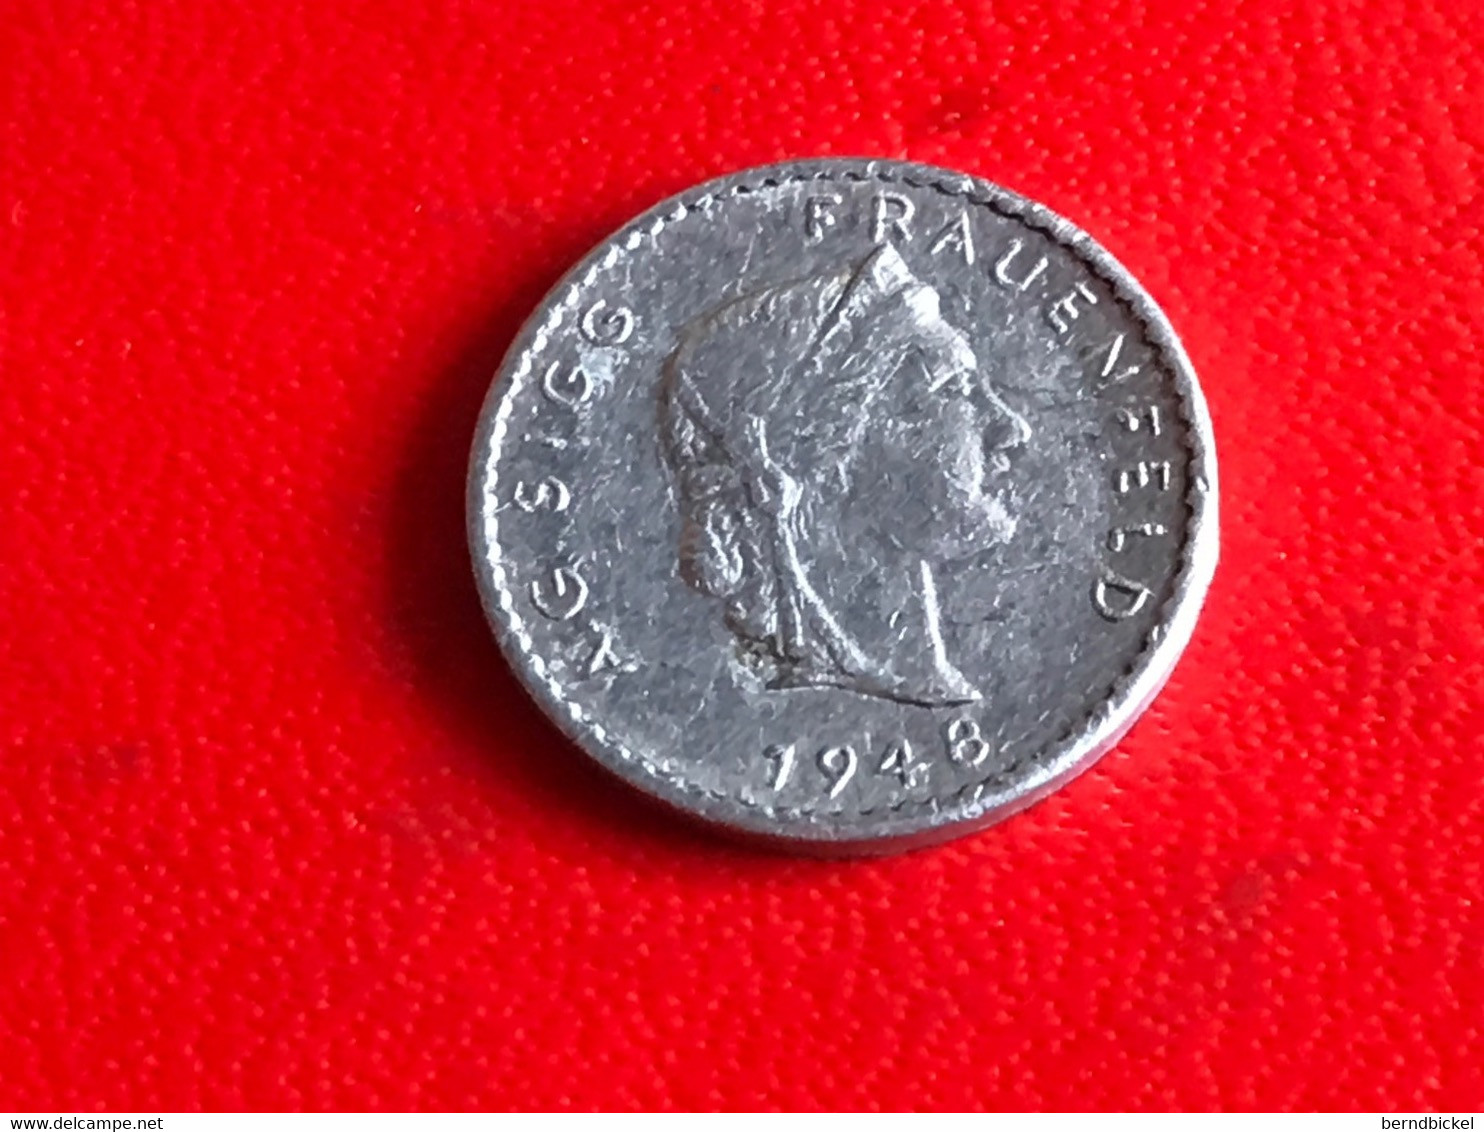 AG Sigg Frauenfeld Schweiz 1948 " 10 " - Pièces écrasées (Elongated Coins)